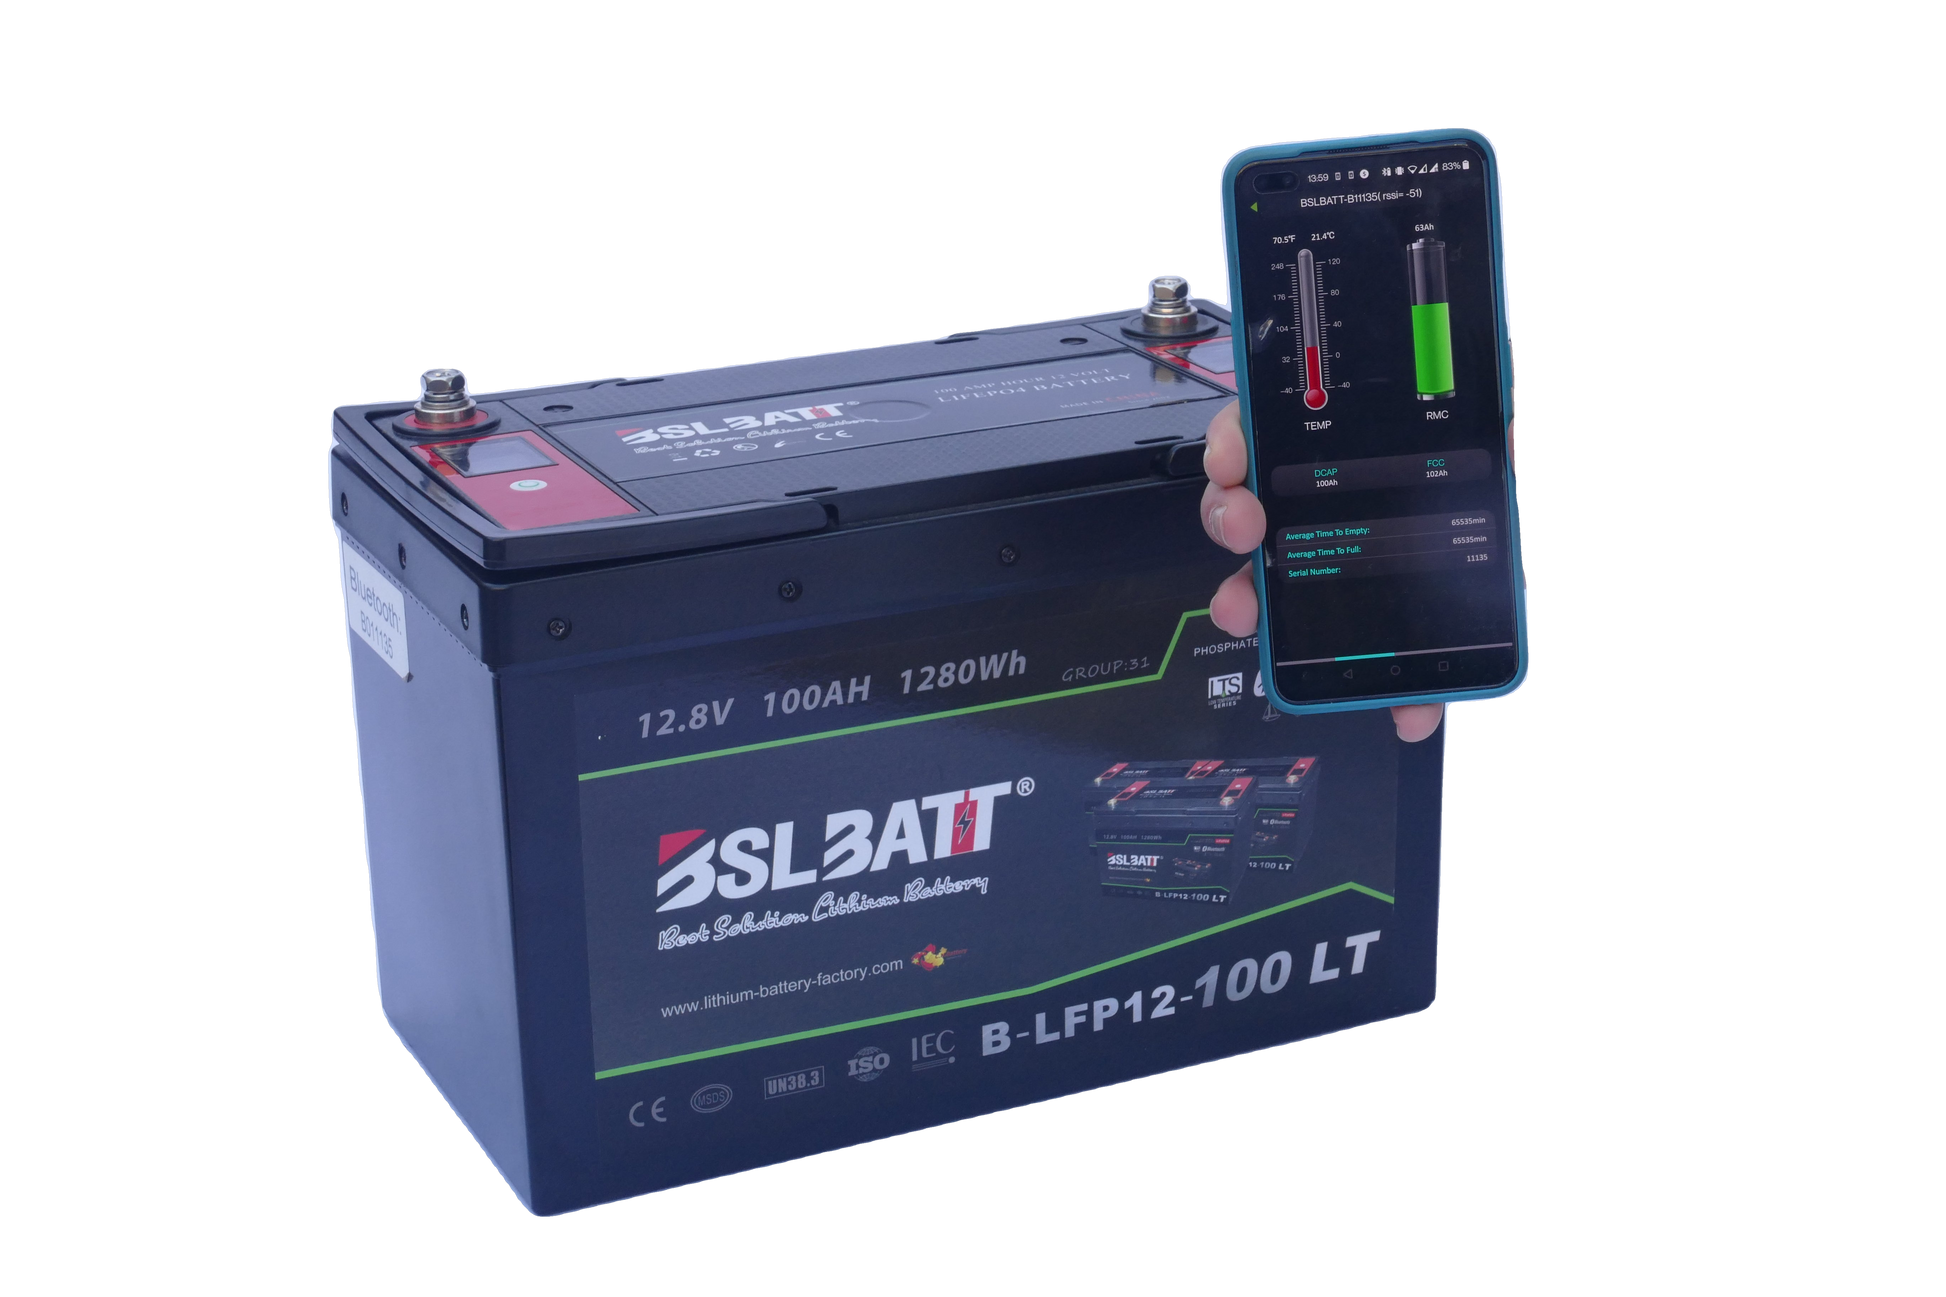 BSLBATT 12V 100AH Lithium Battery (bluetooth+display) – e-way